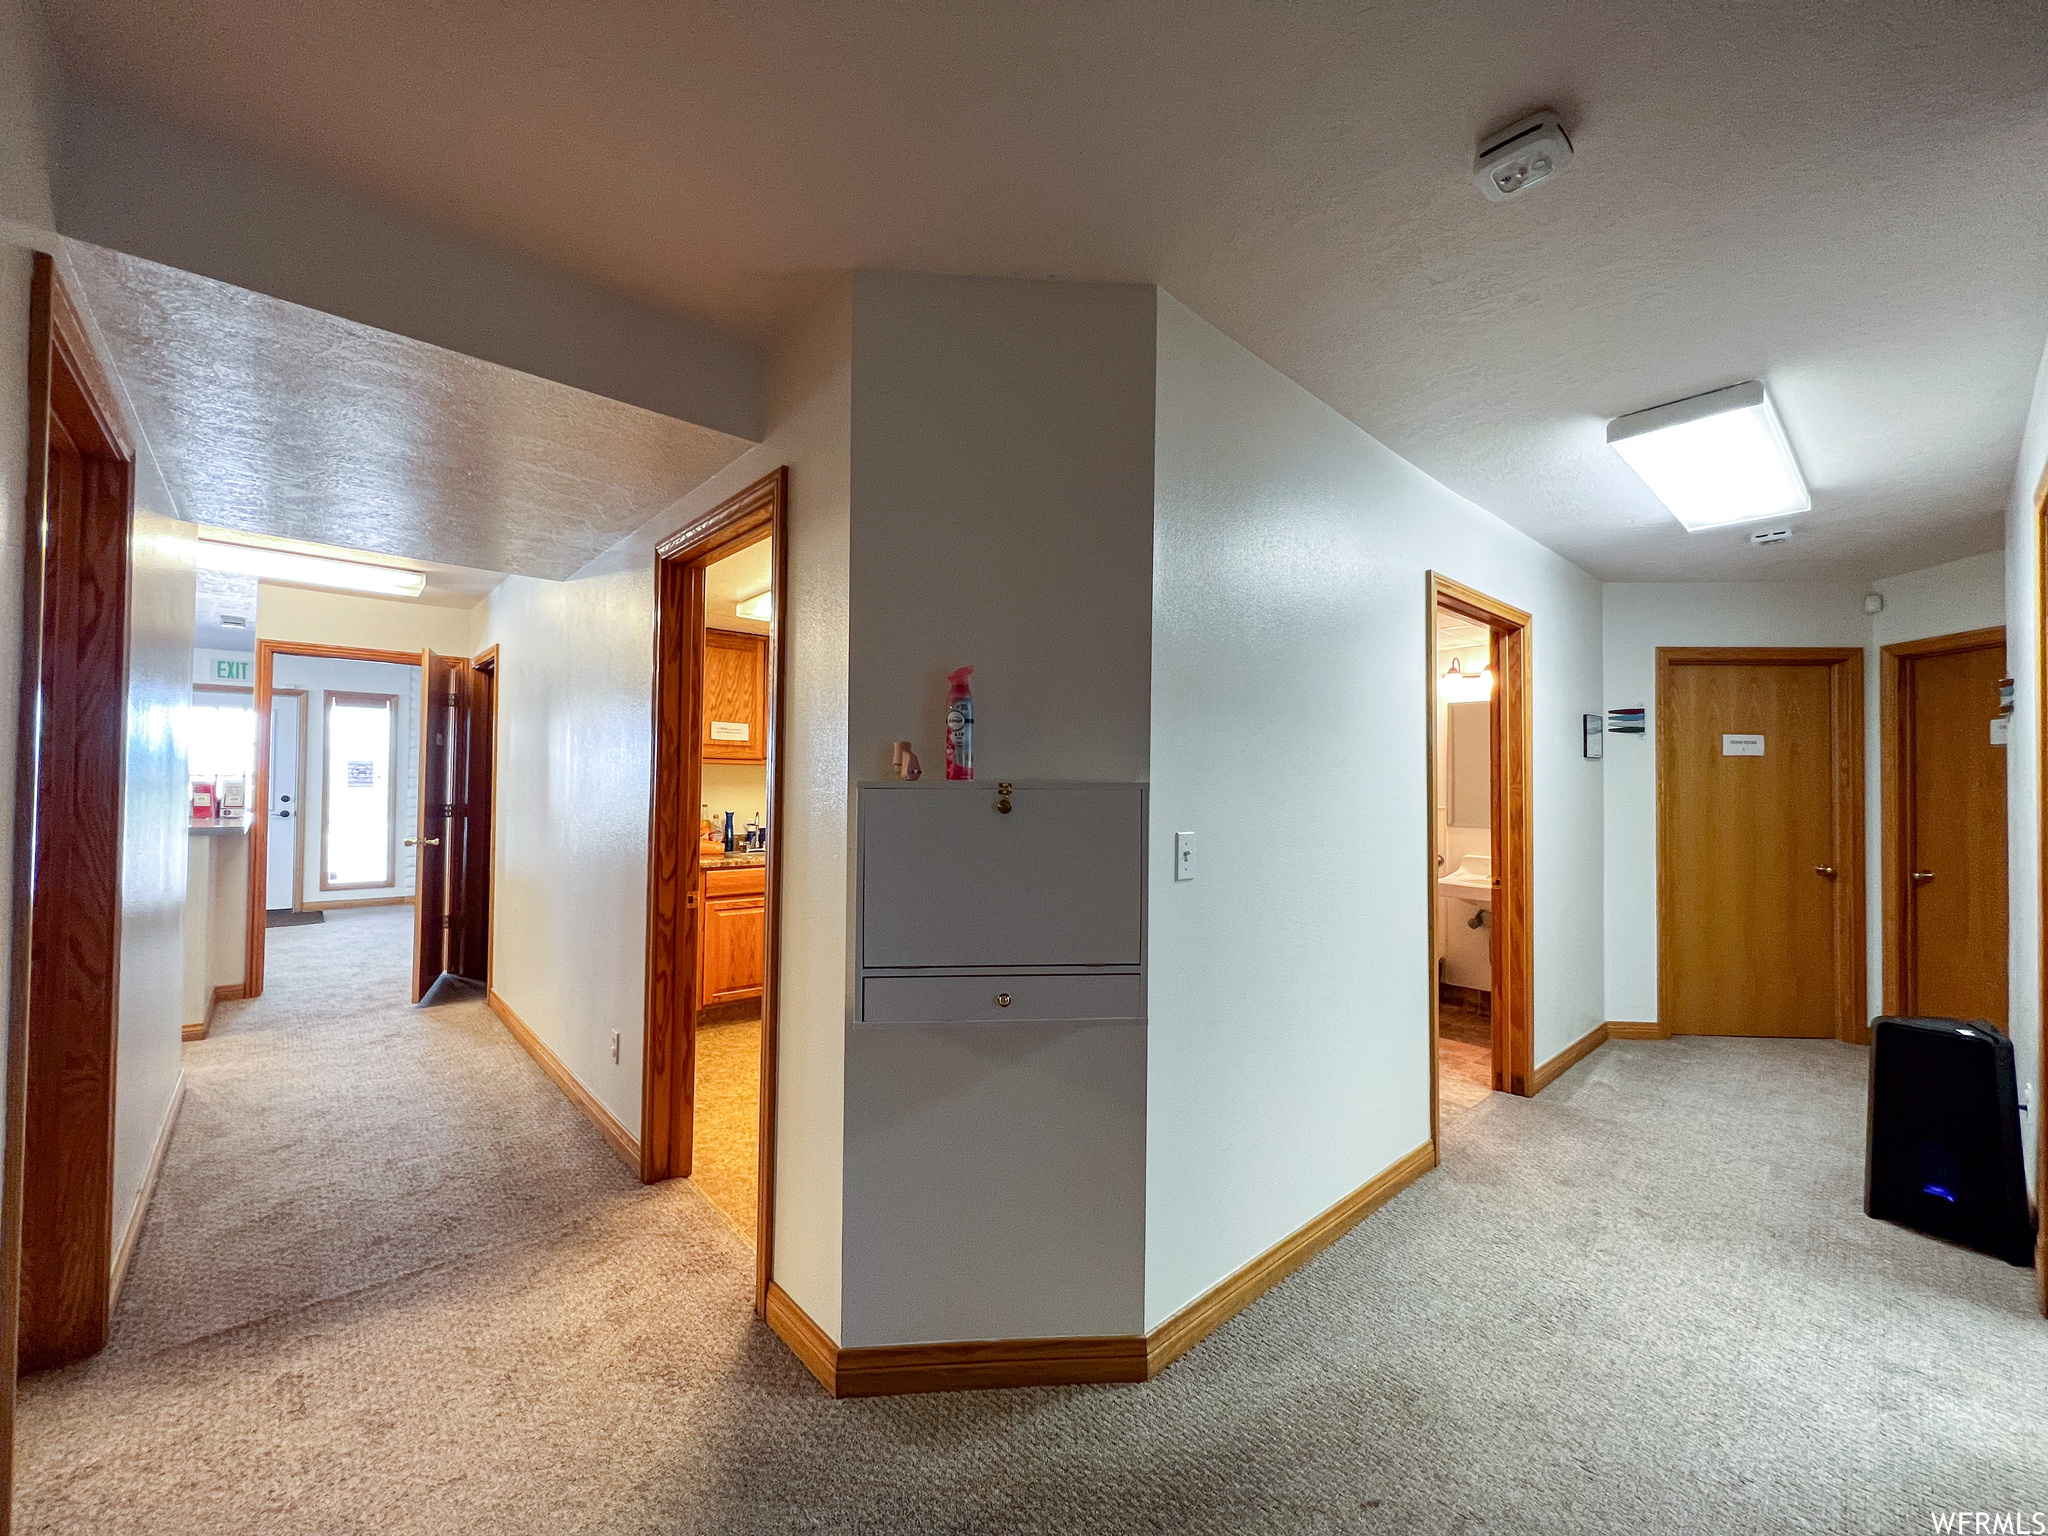 Hall featuring light carpet